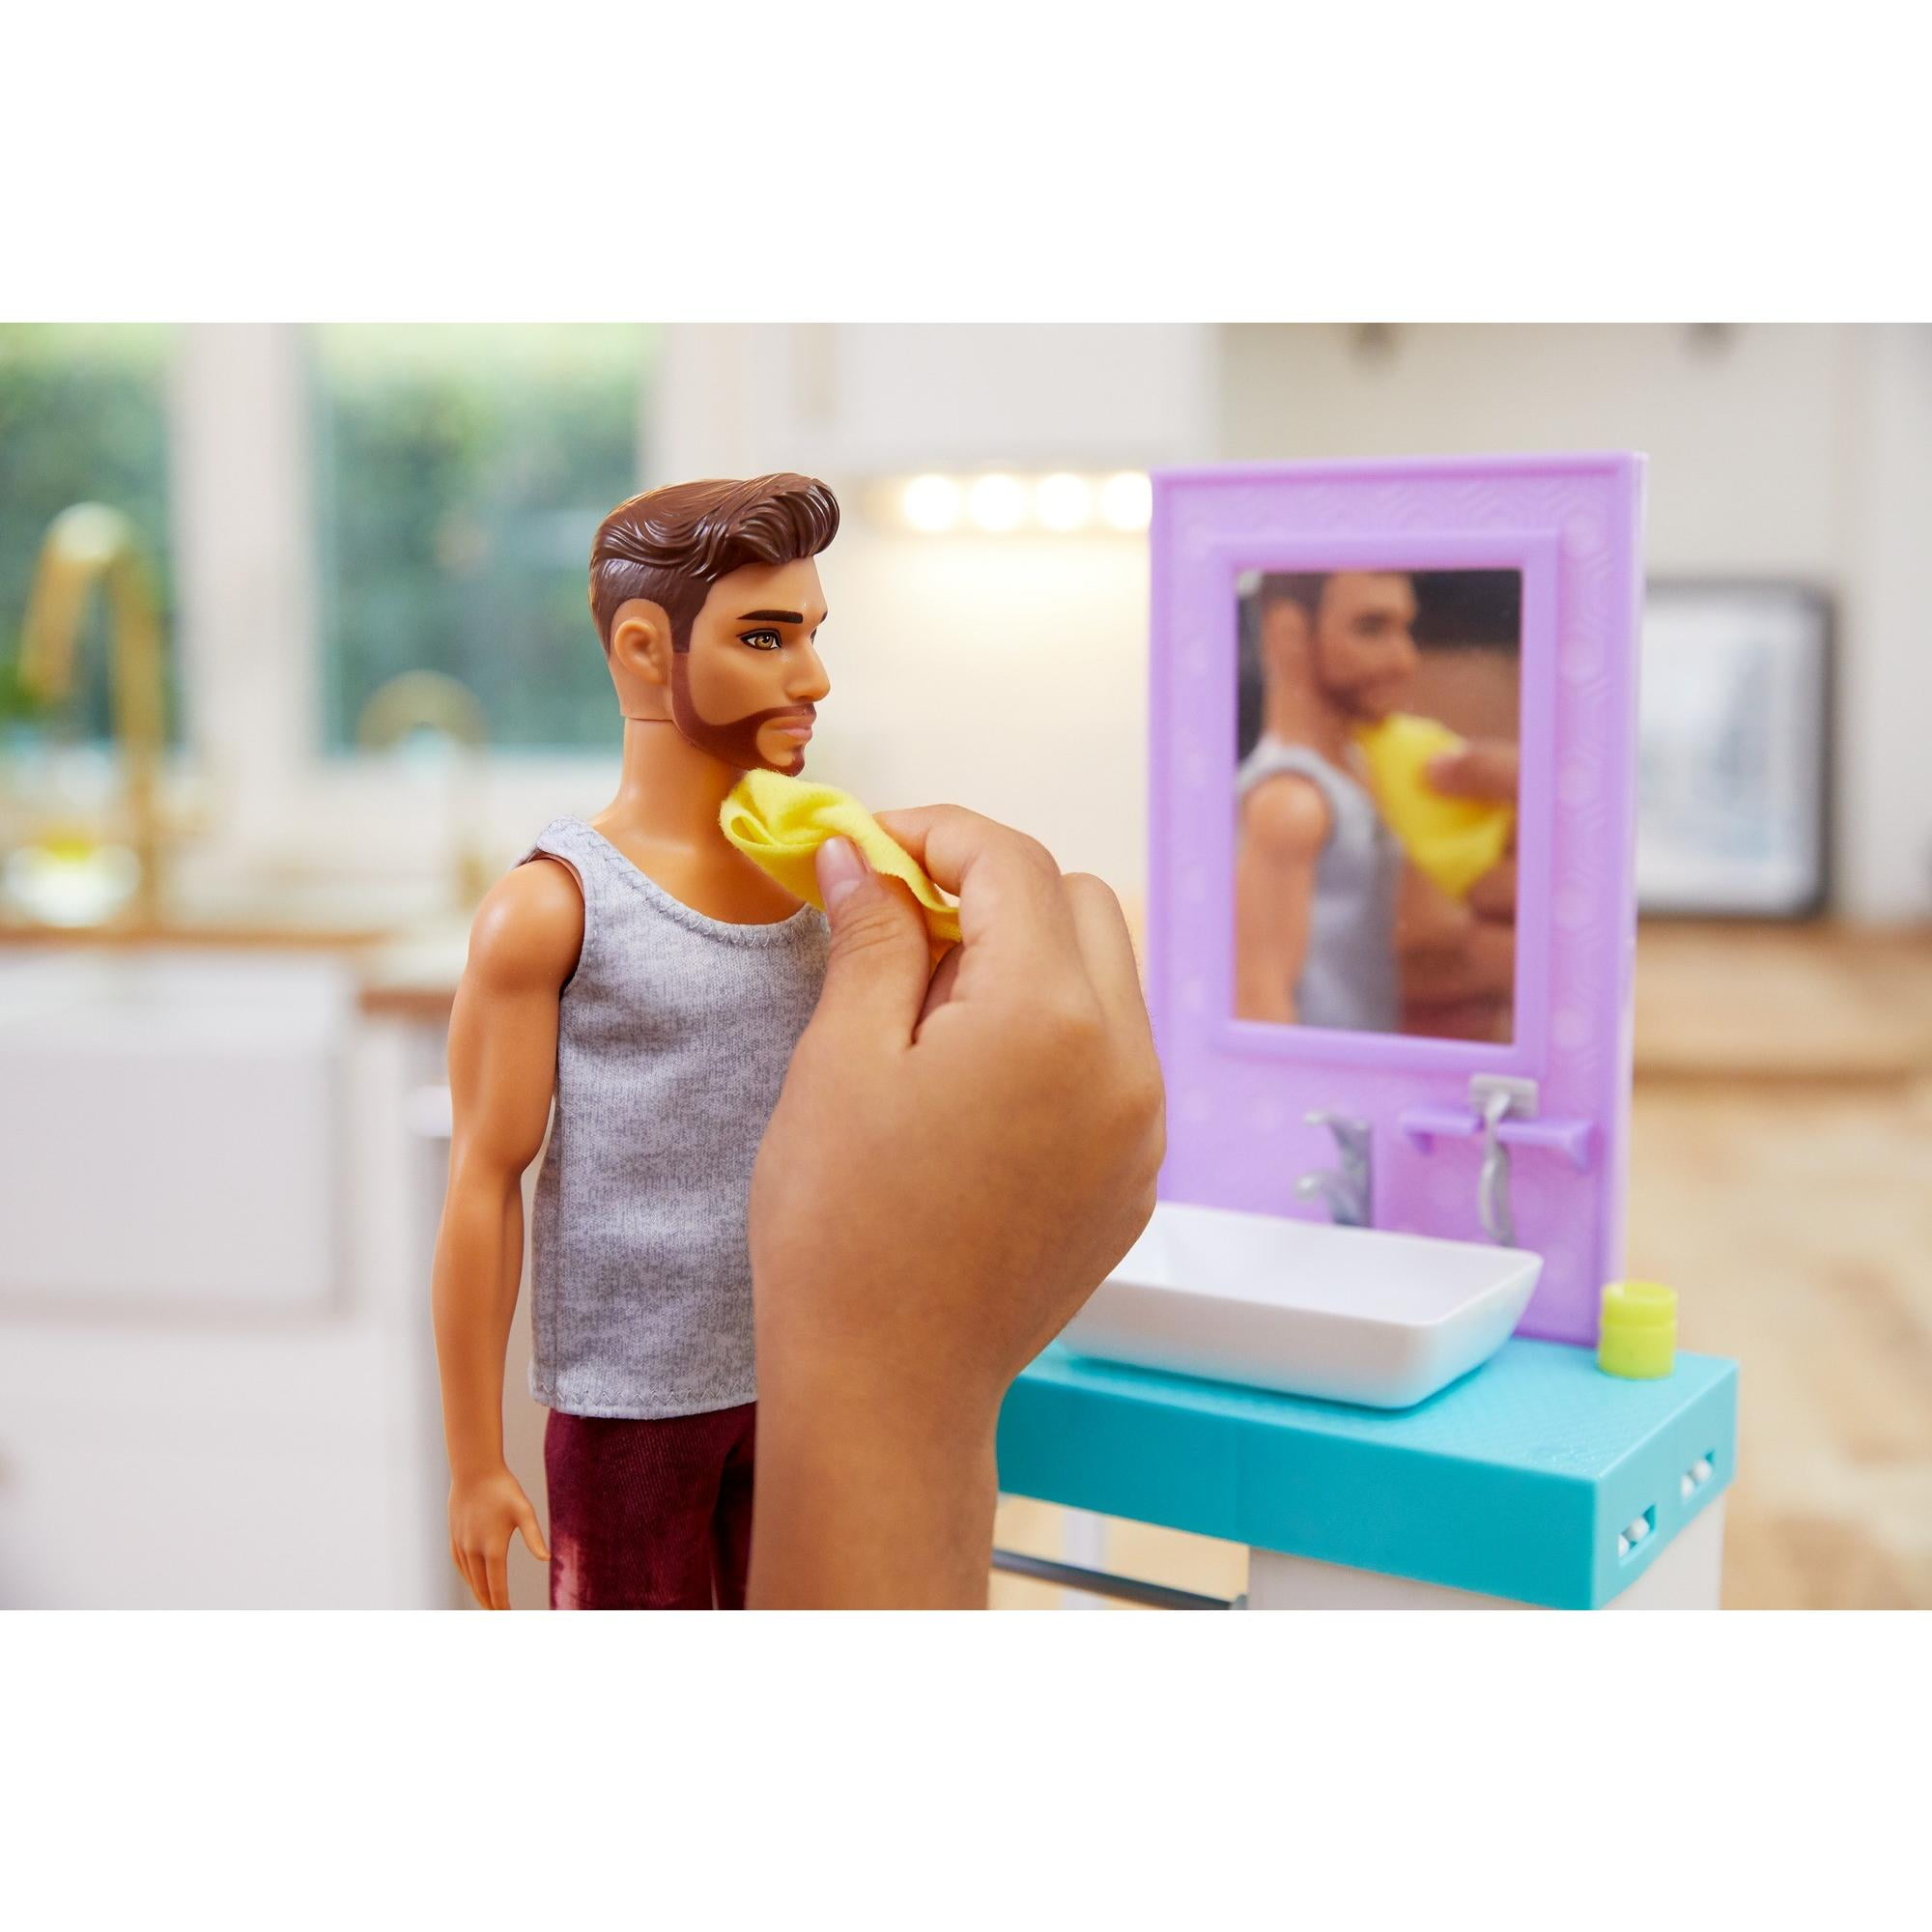 Mattel NEW Barbie Ken Bathroom Playset With Ken Doll 